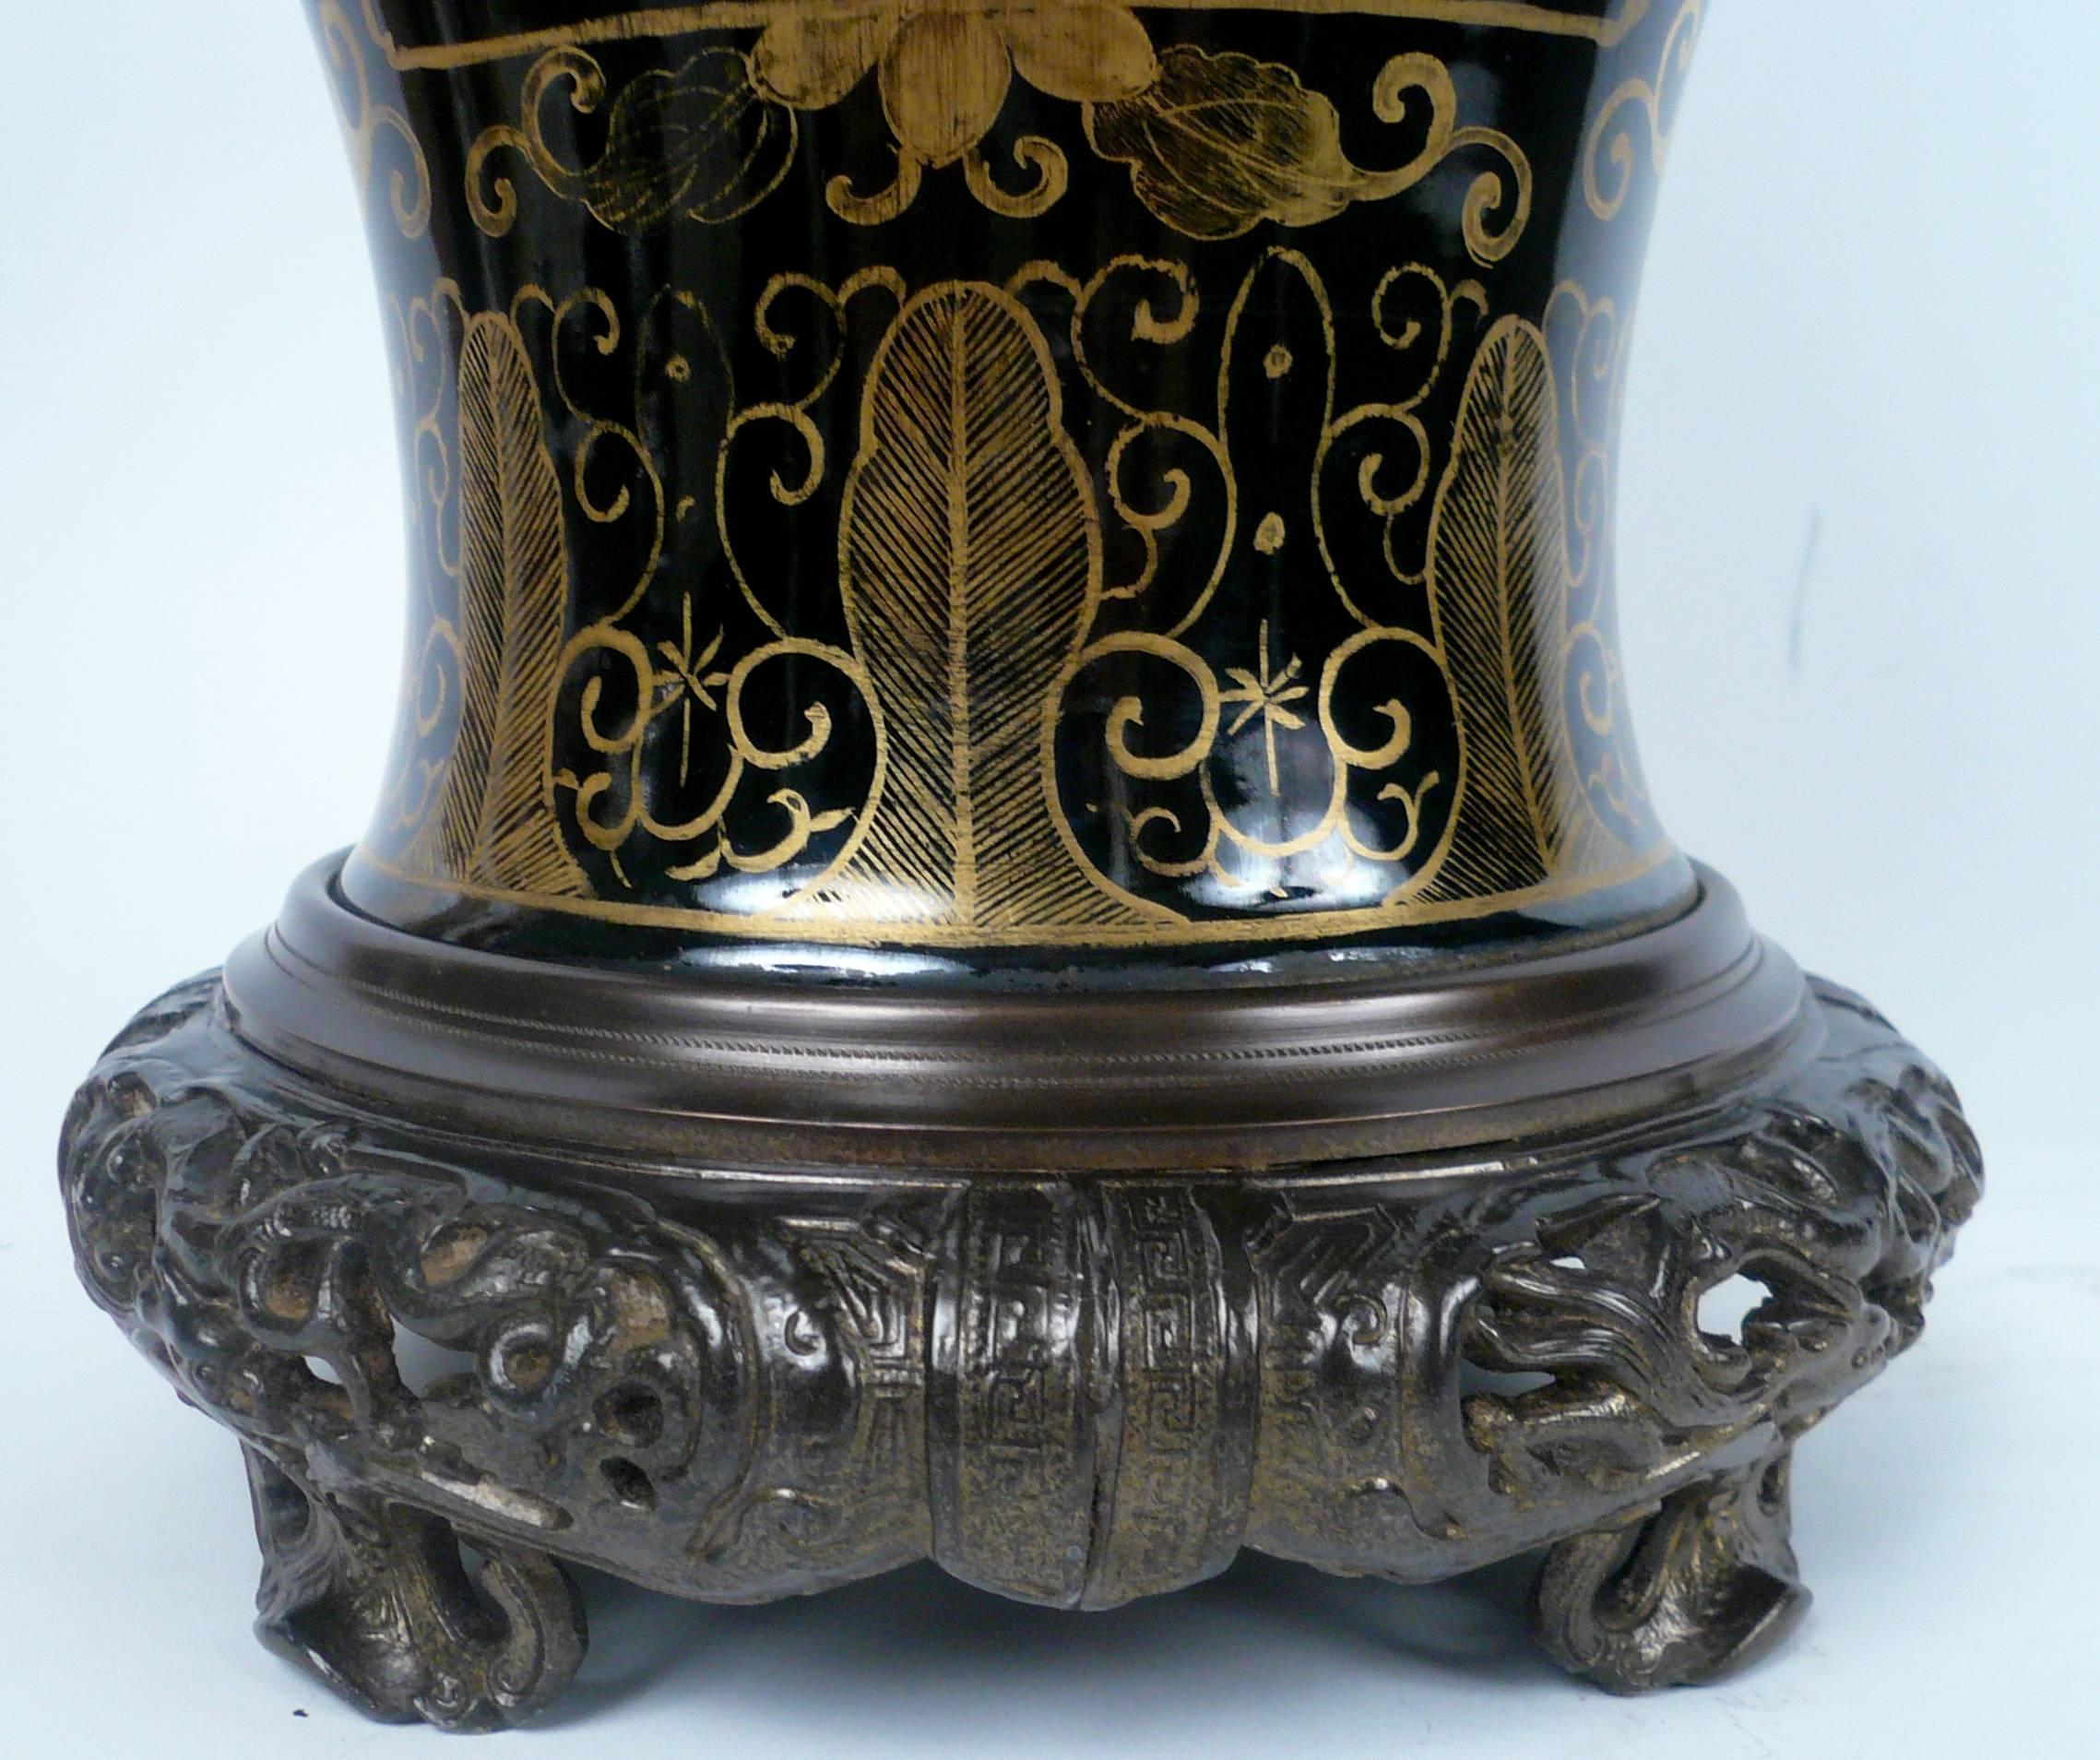 Chinese Export Chinese Gilt Chinoiserie Decorated, Black Glazed Porcelain Vase, Electrified